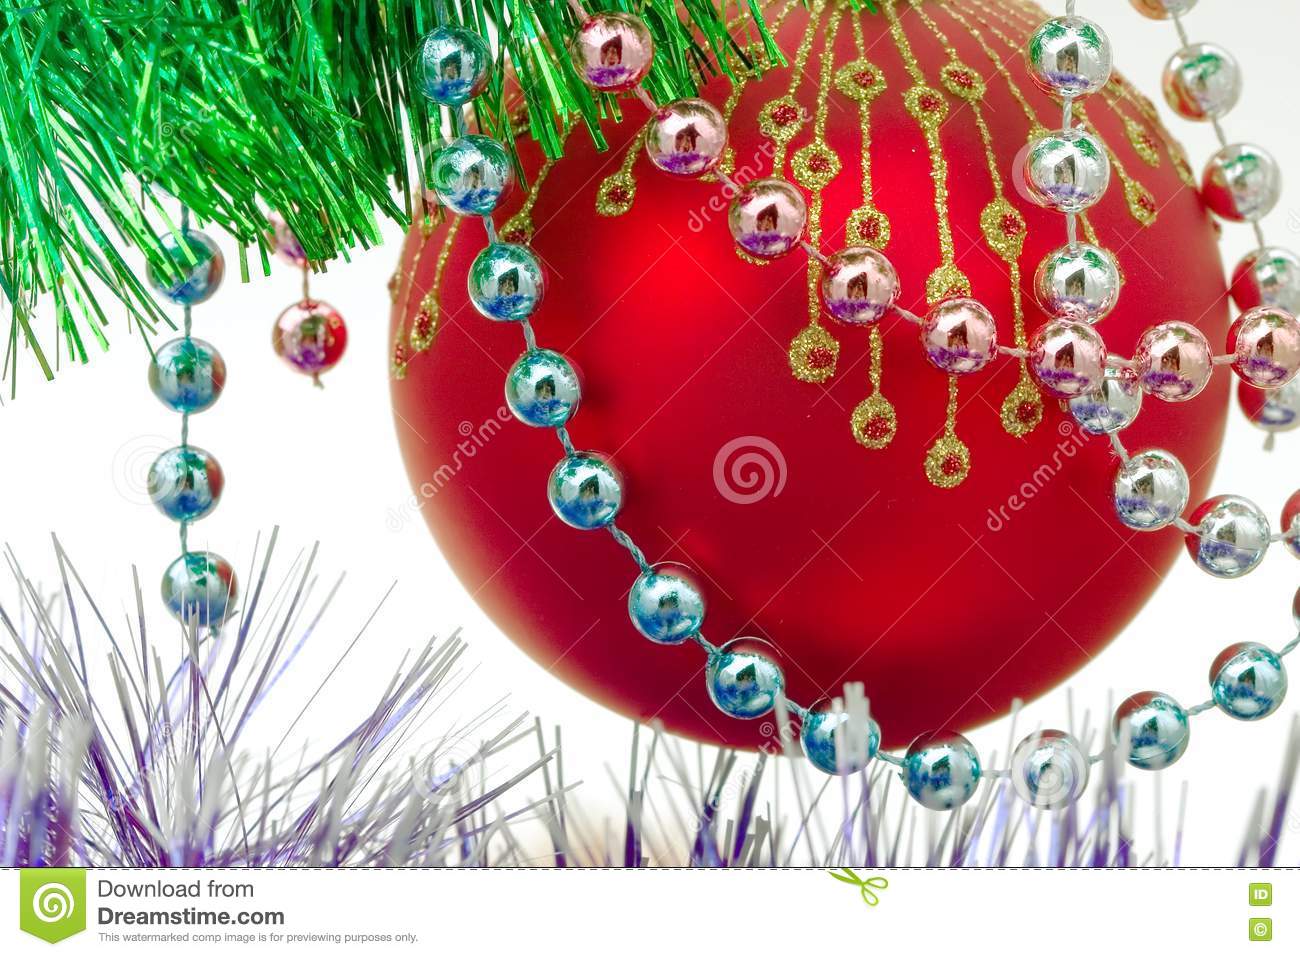 https://www.dreamstime.com/christmas-decoration-stock-photos-image-free-1611593